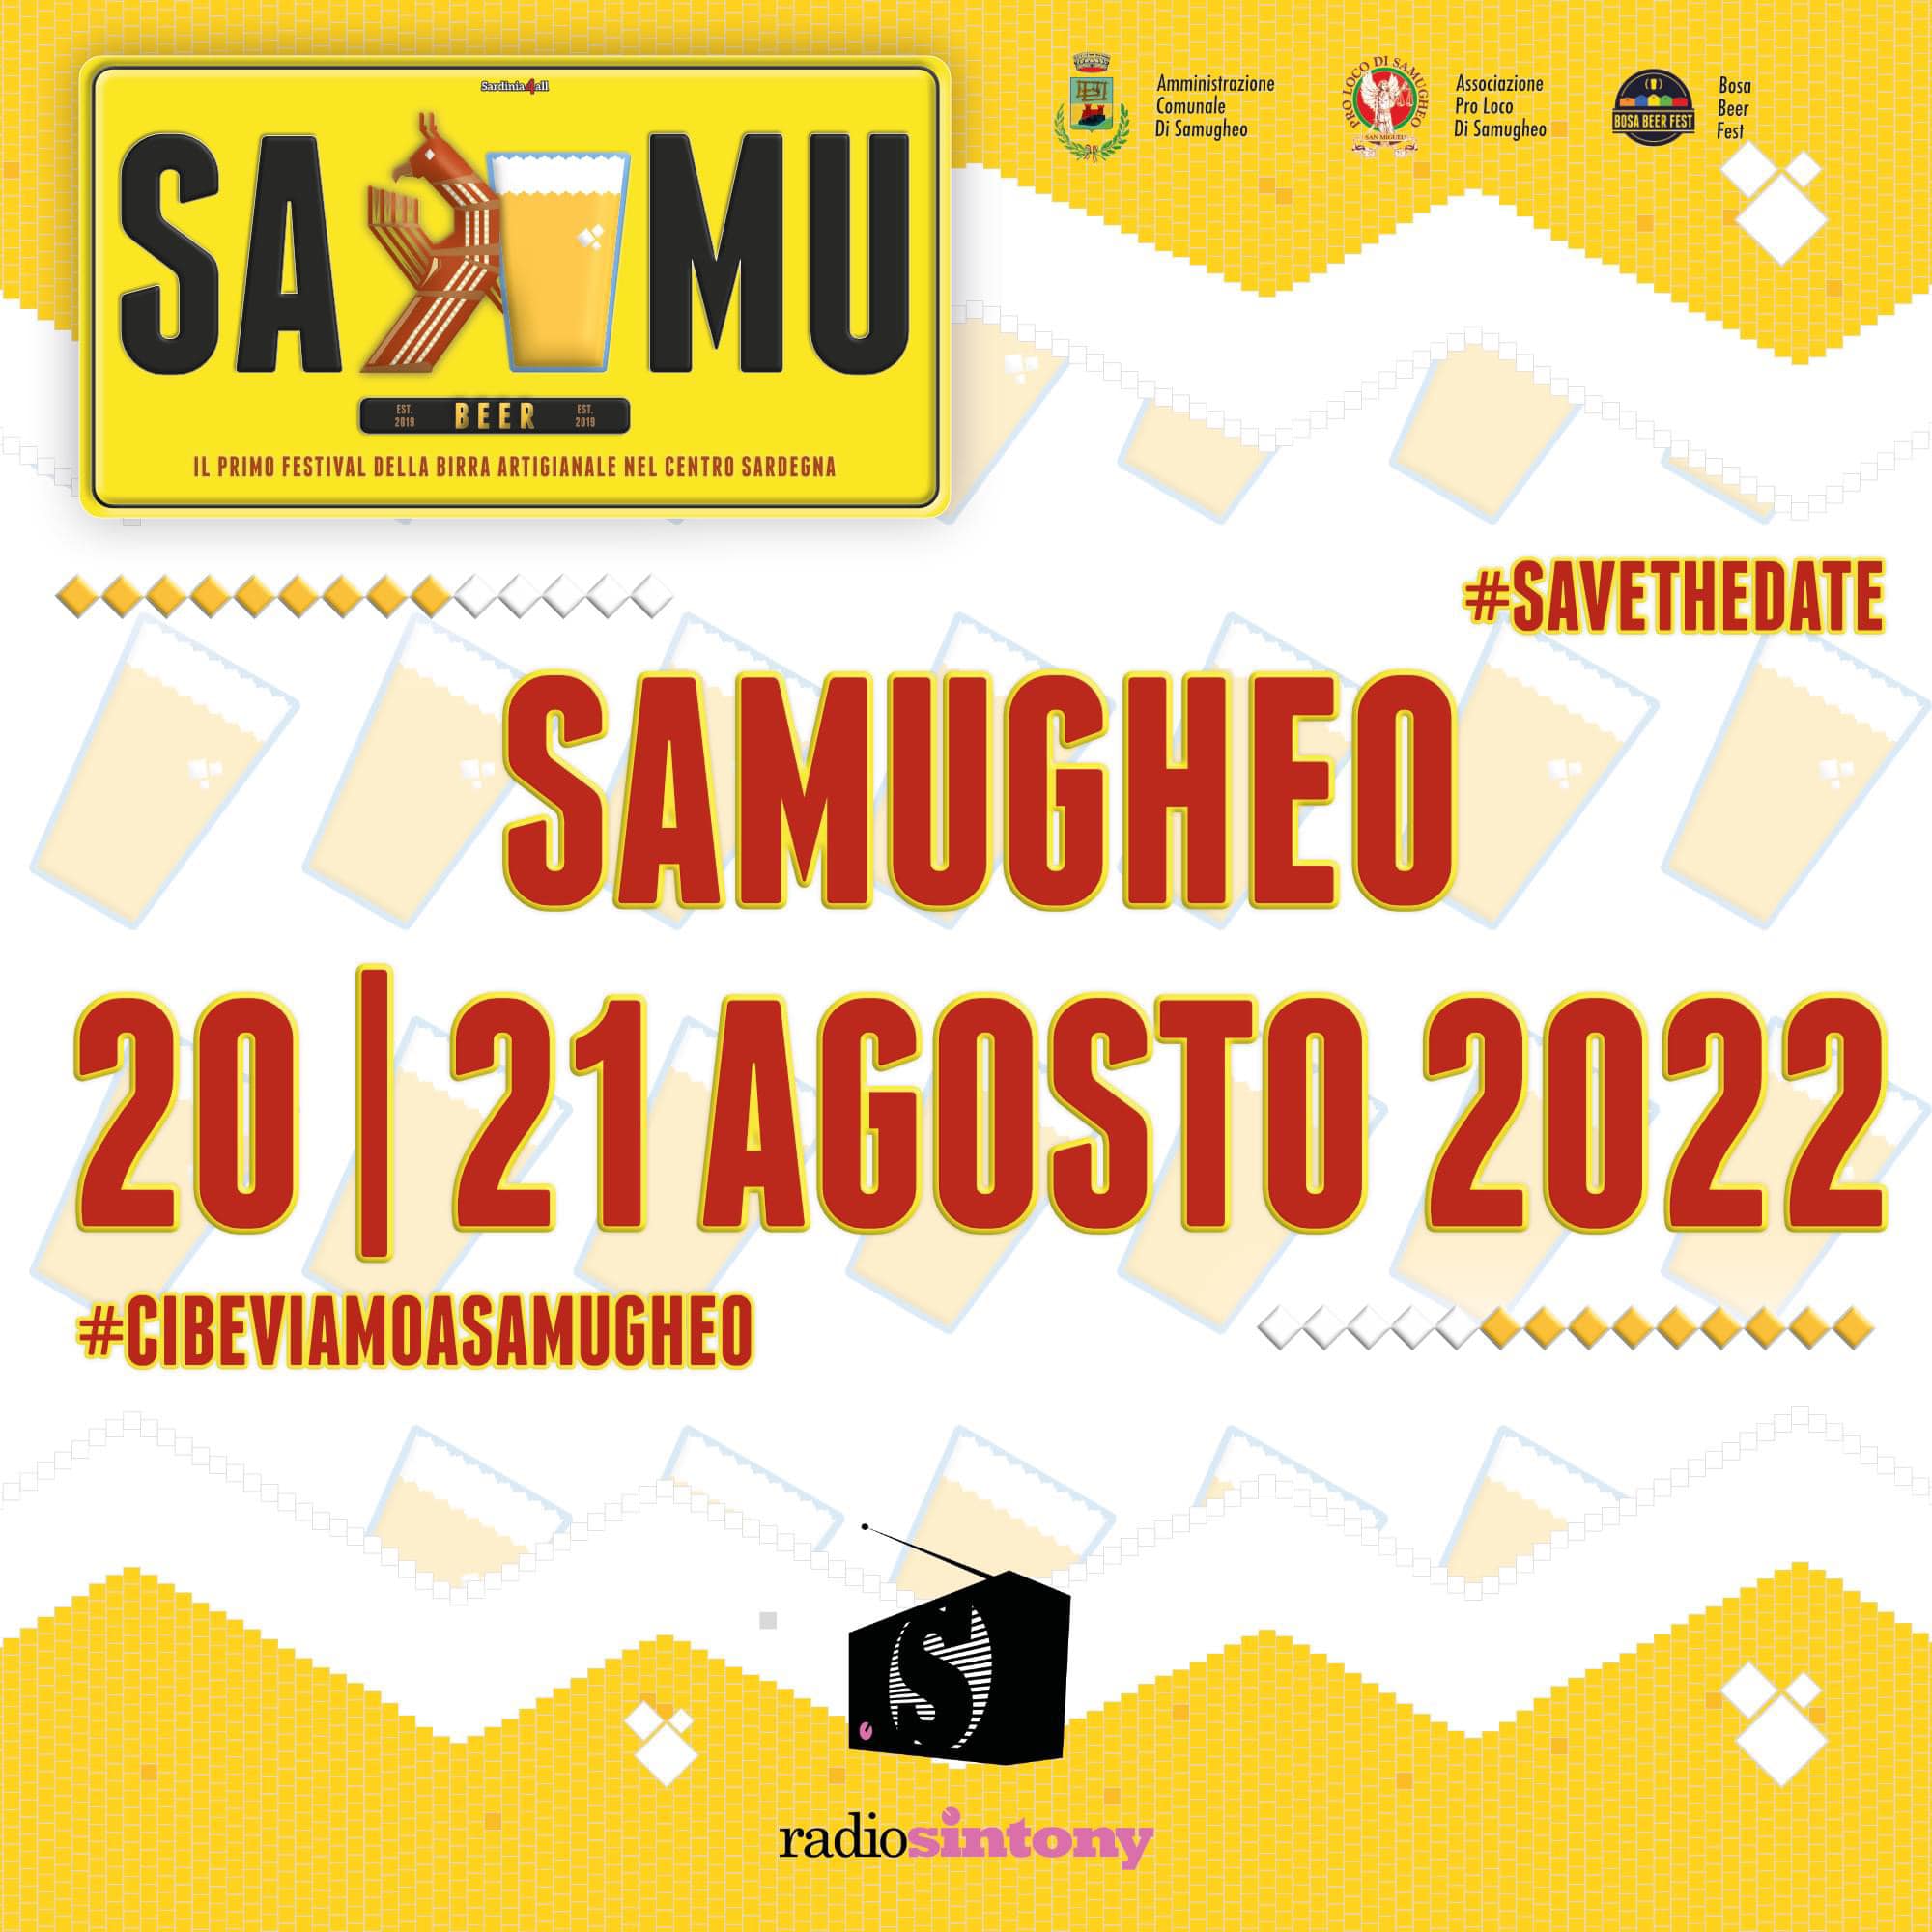 SA_MU Beer a Samugheo